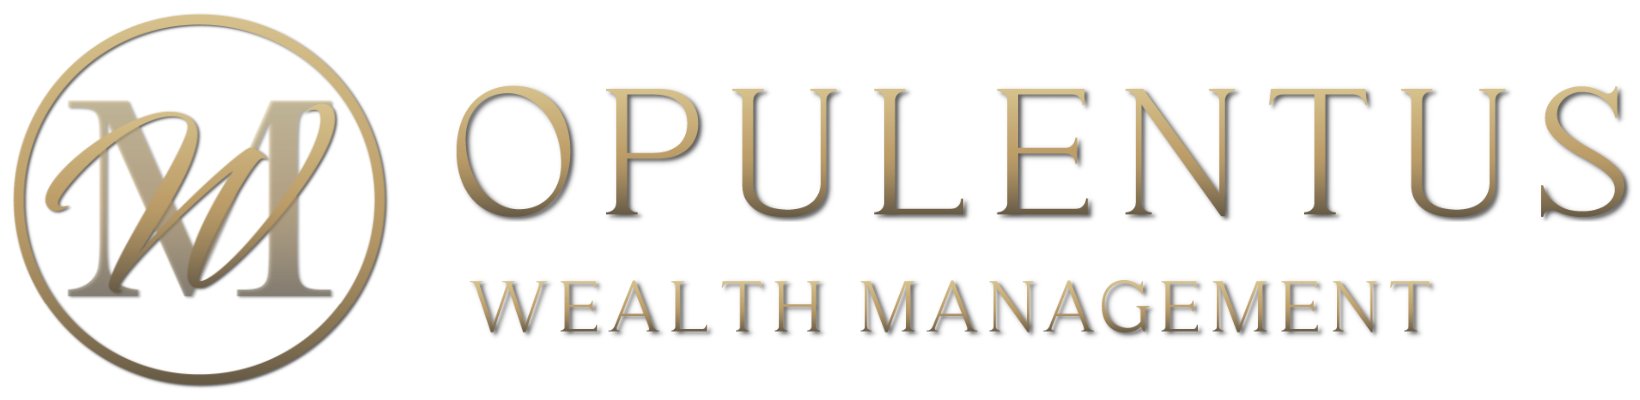 opulentus wealth management logo